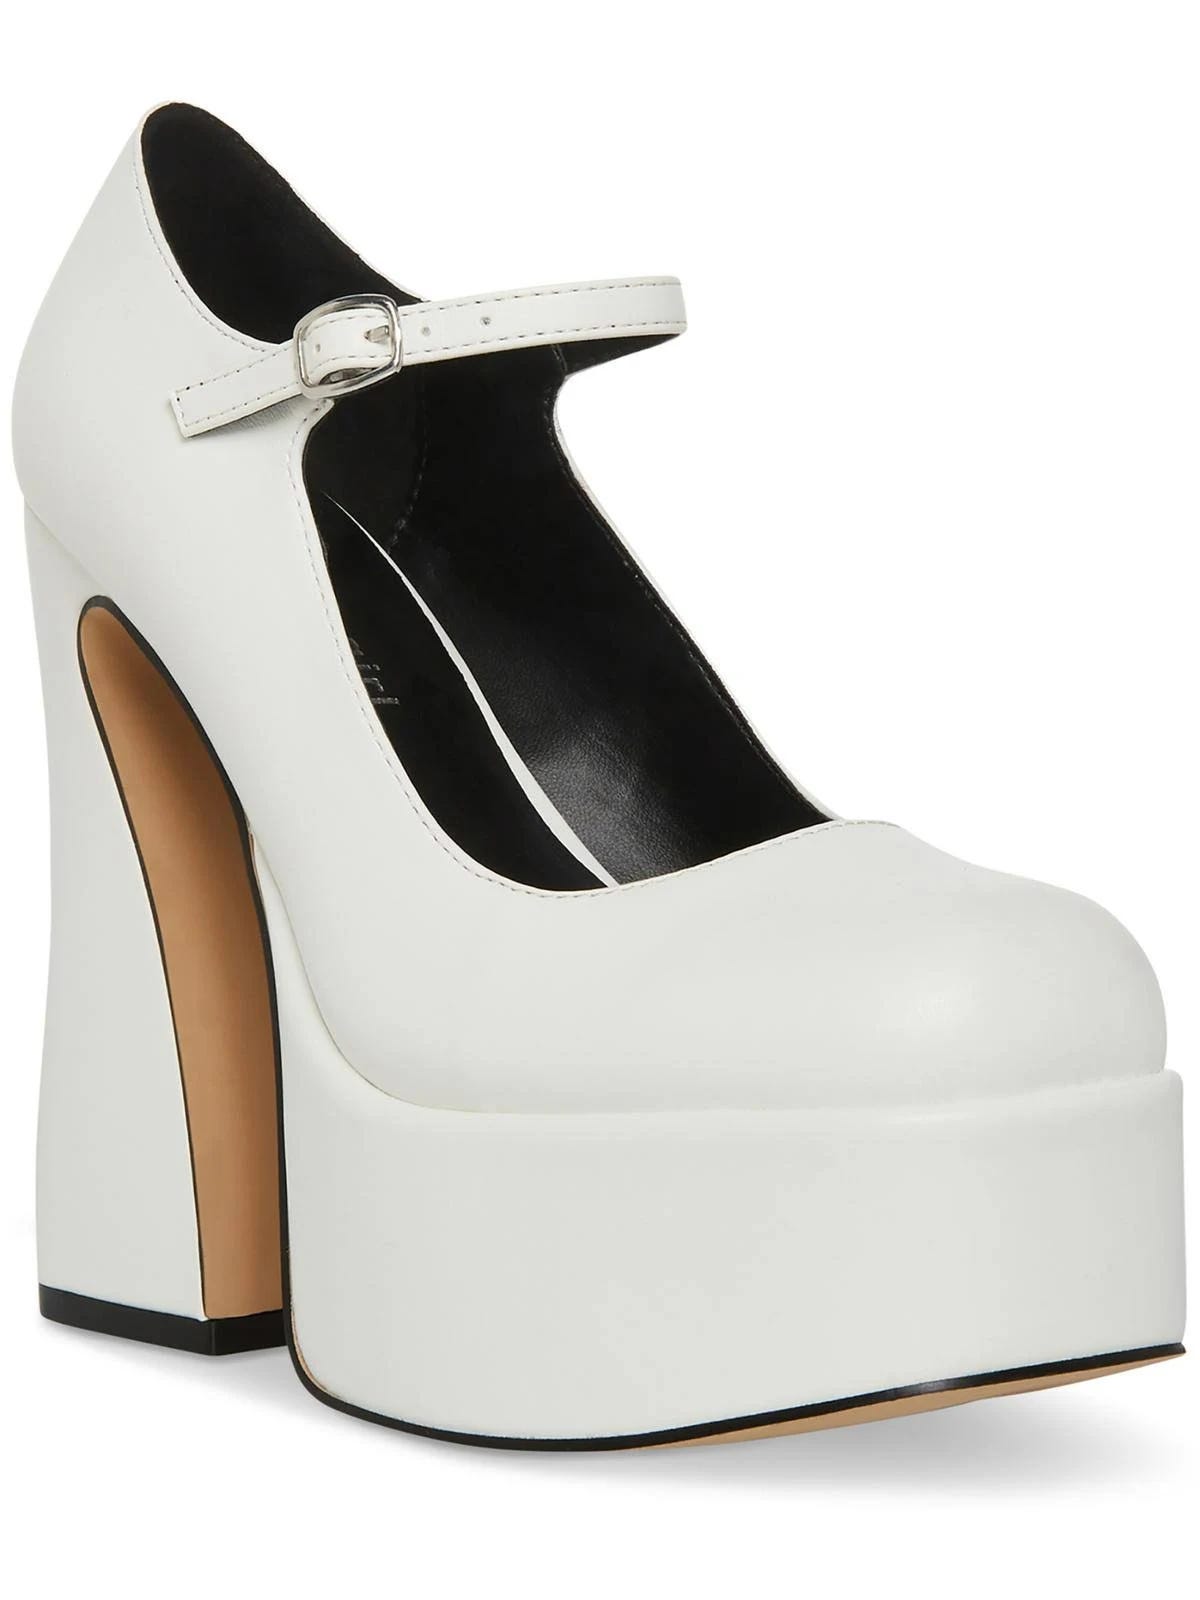 Madden Girl Khloe: White Platform Heels with Buckle Detail | Image